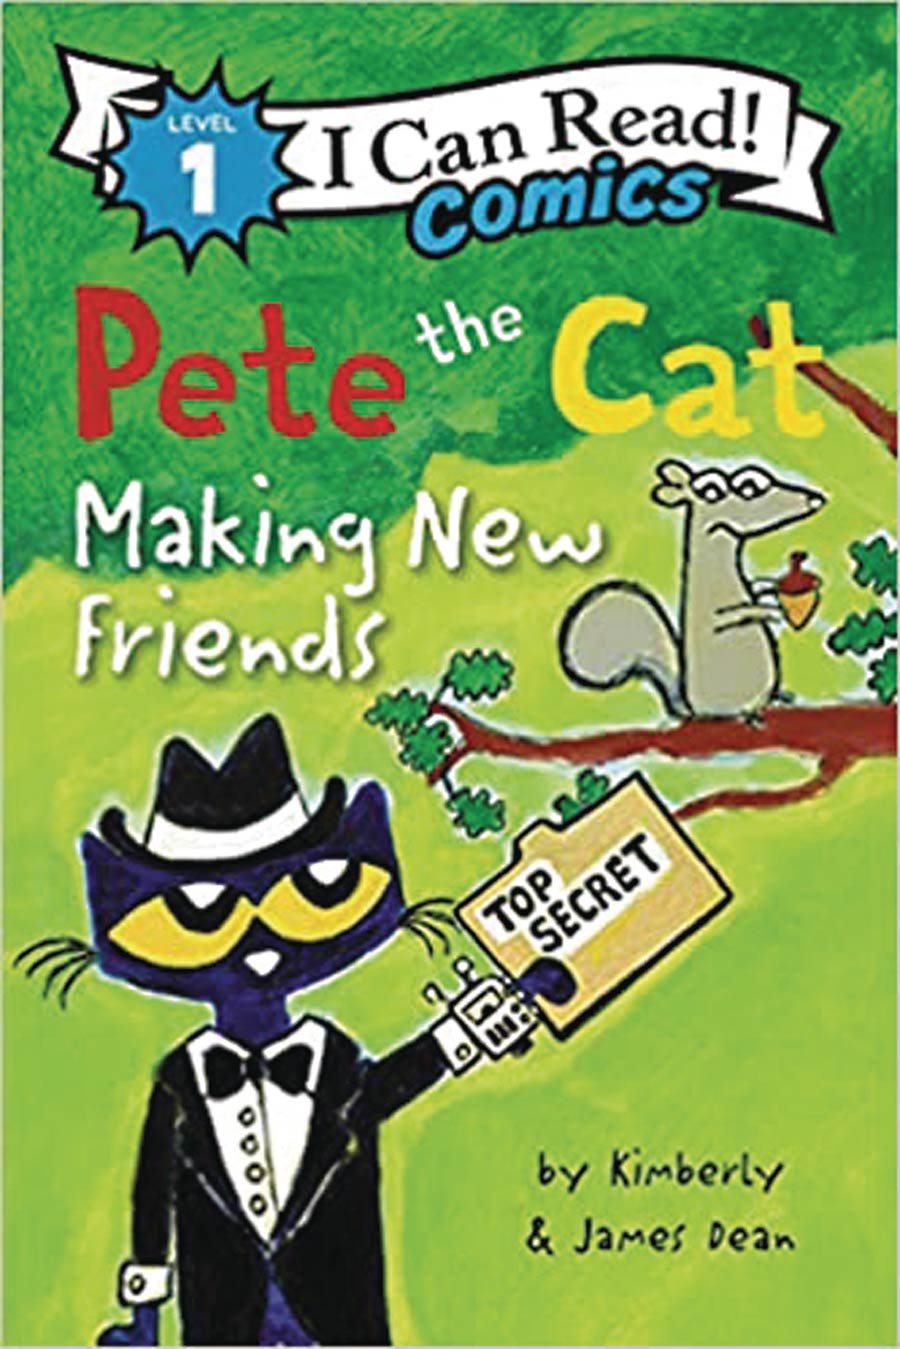 I Can Read Comics Level 1 Pete The Cat Secret Mission Making New Friends HC